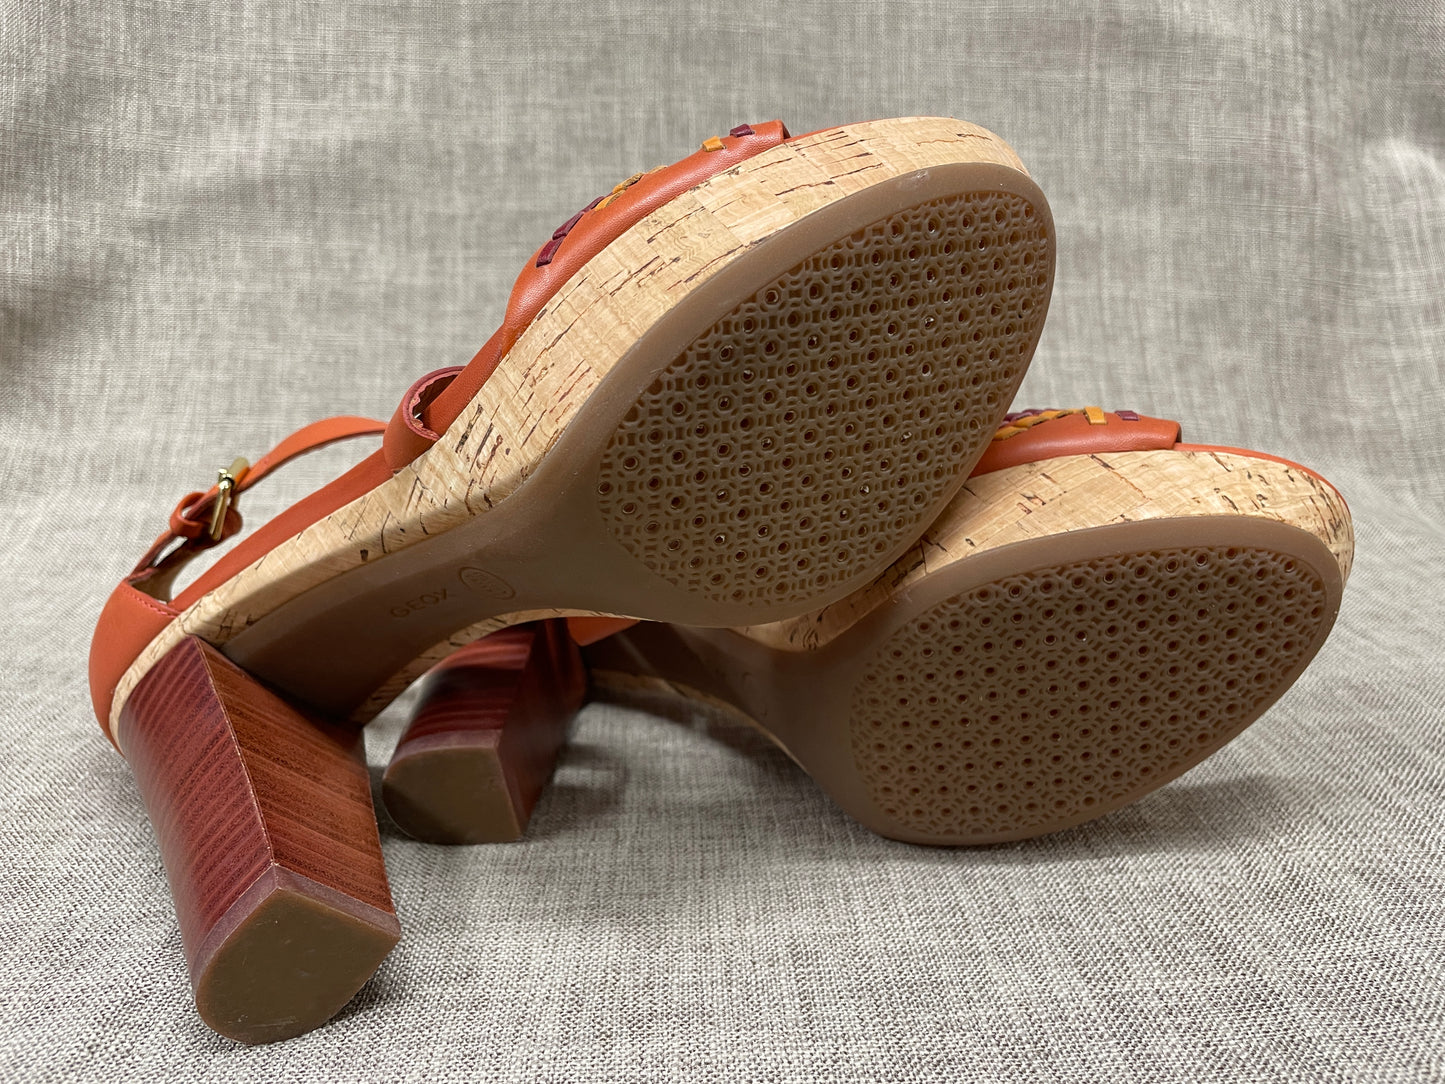 New Geox Respira Burnt Orange Leather Heeled Platform Sandals EU 39 UK 6